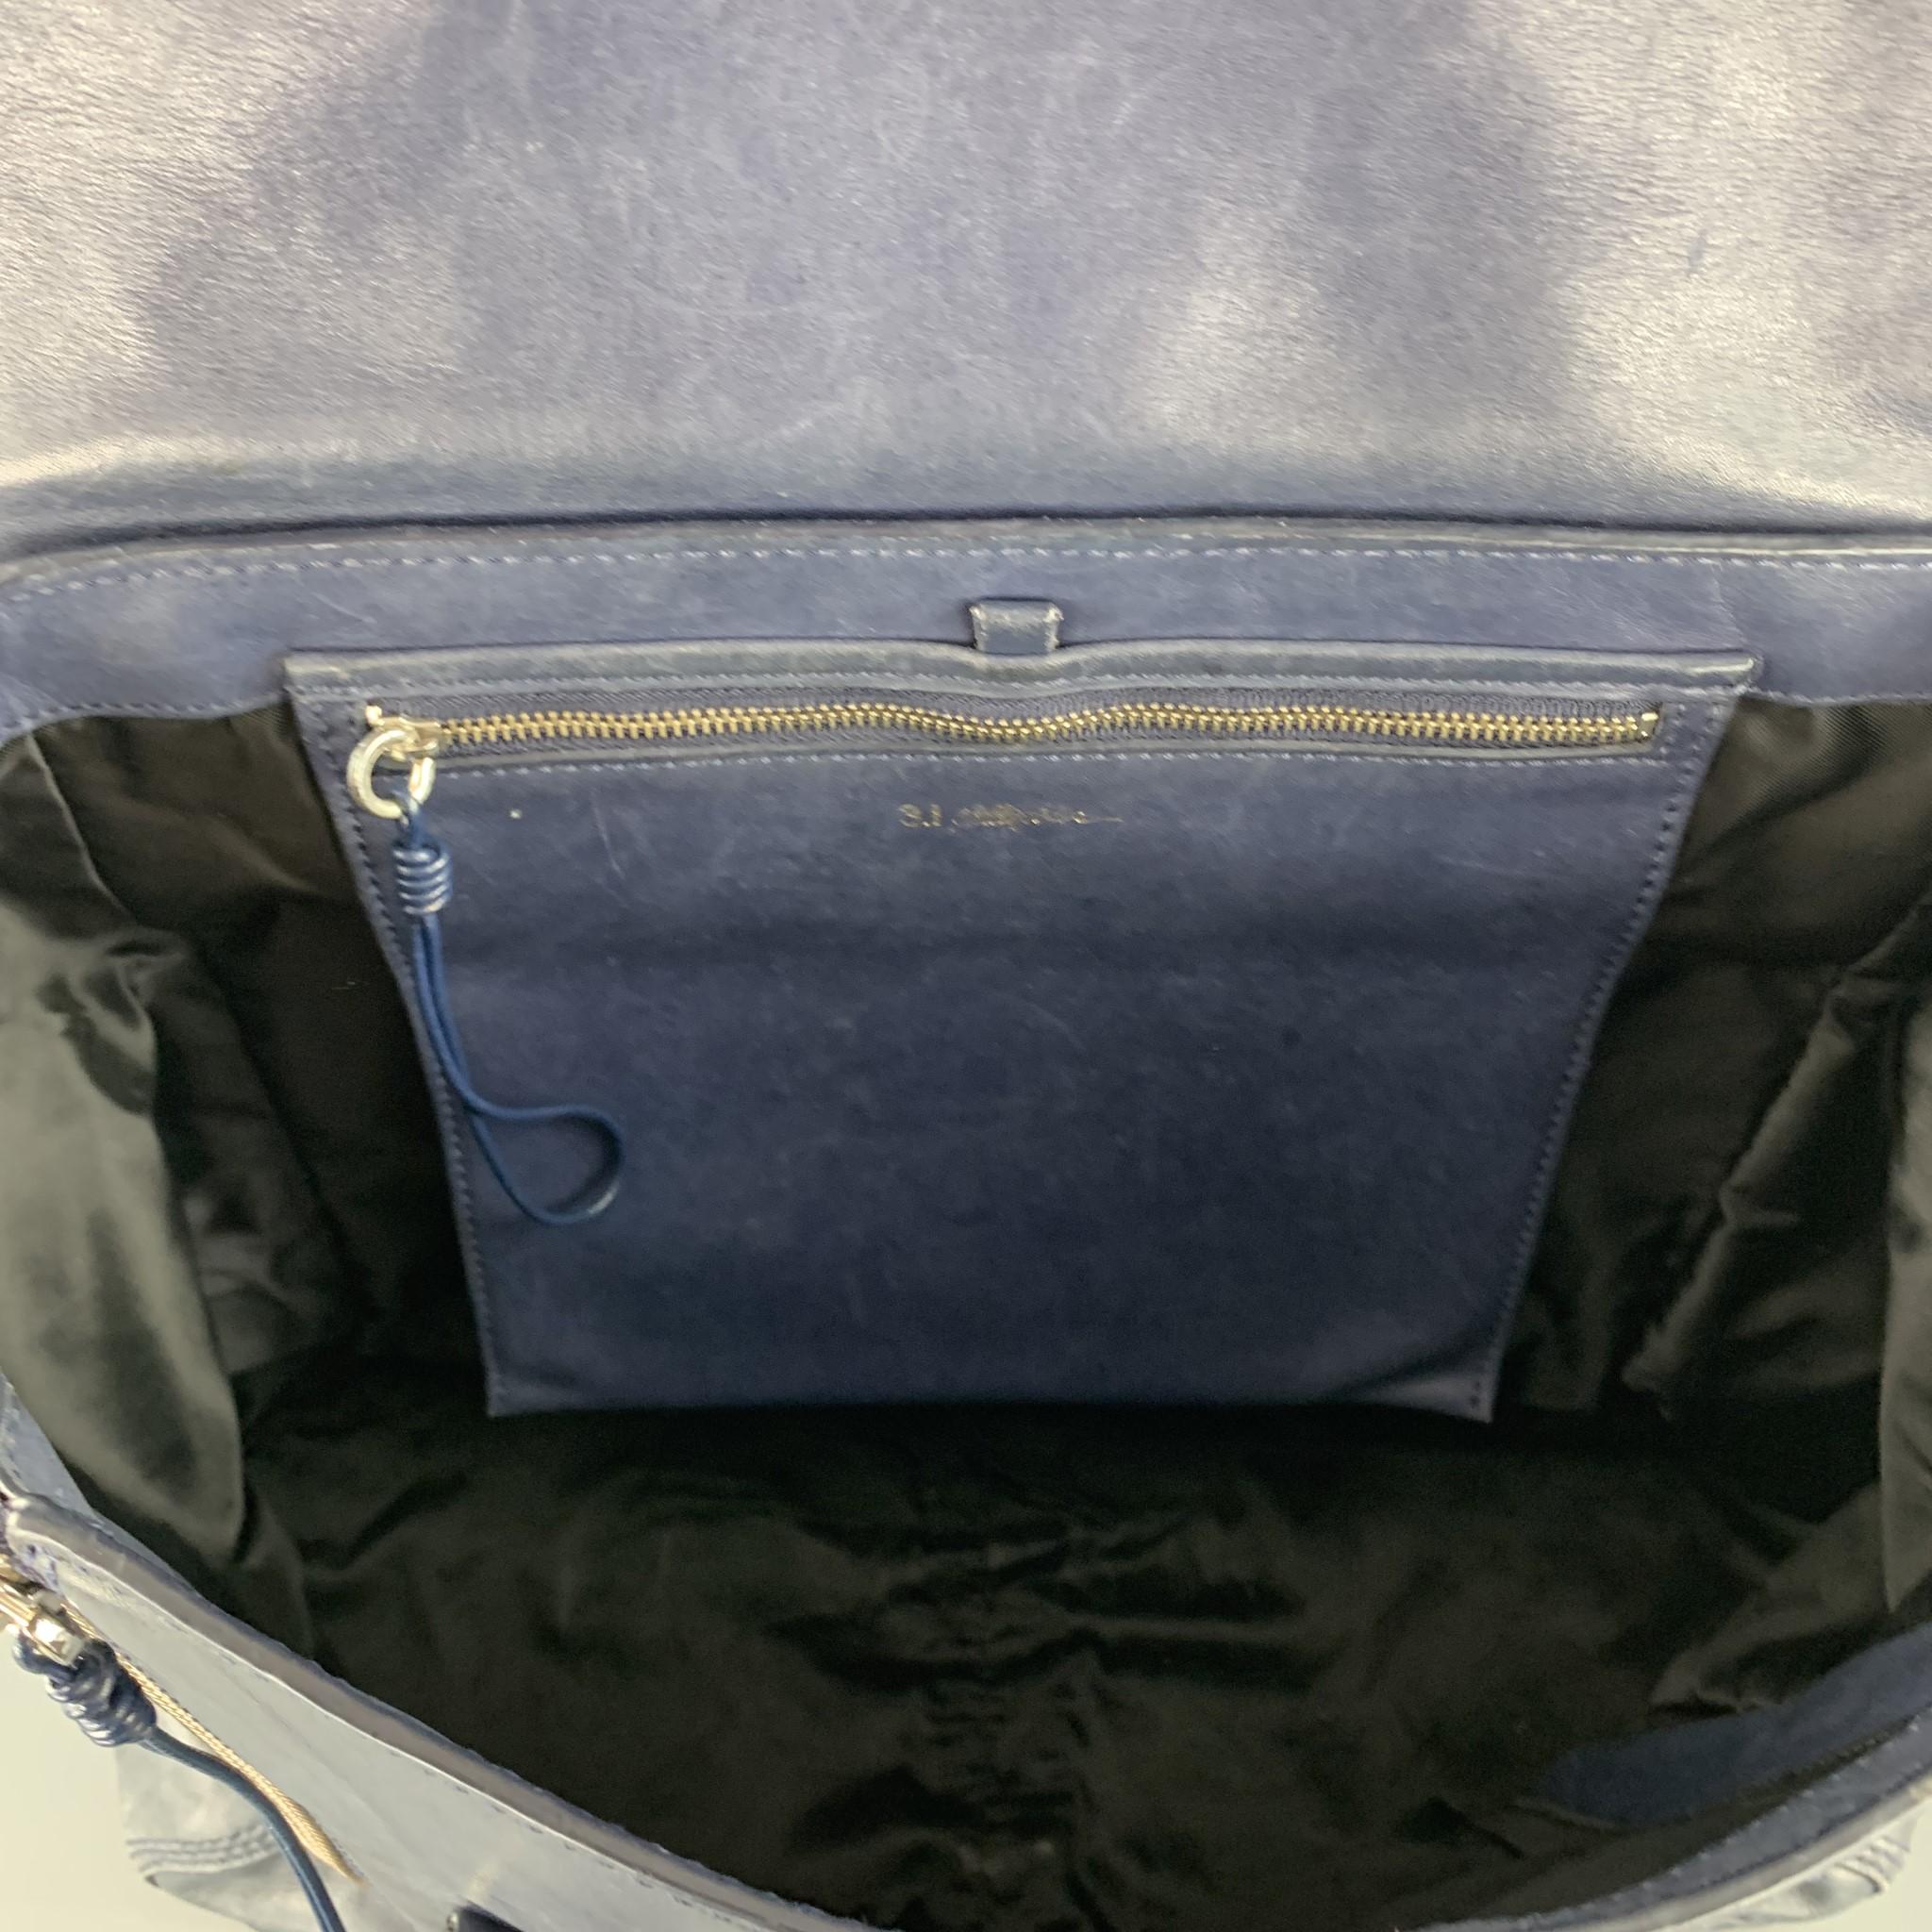 3.1 PHILLIP LIM Blue Soft leather Pashli Top Handles Handbag Bag  3